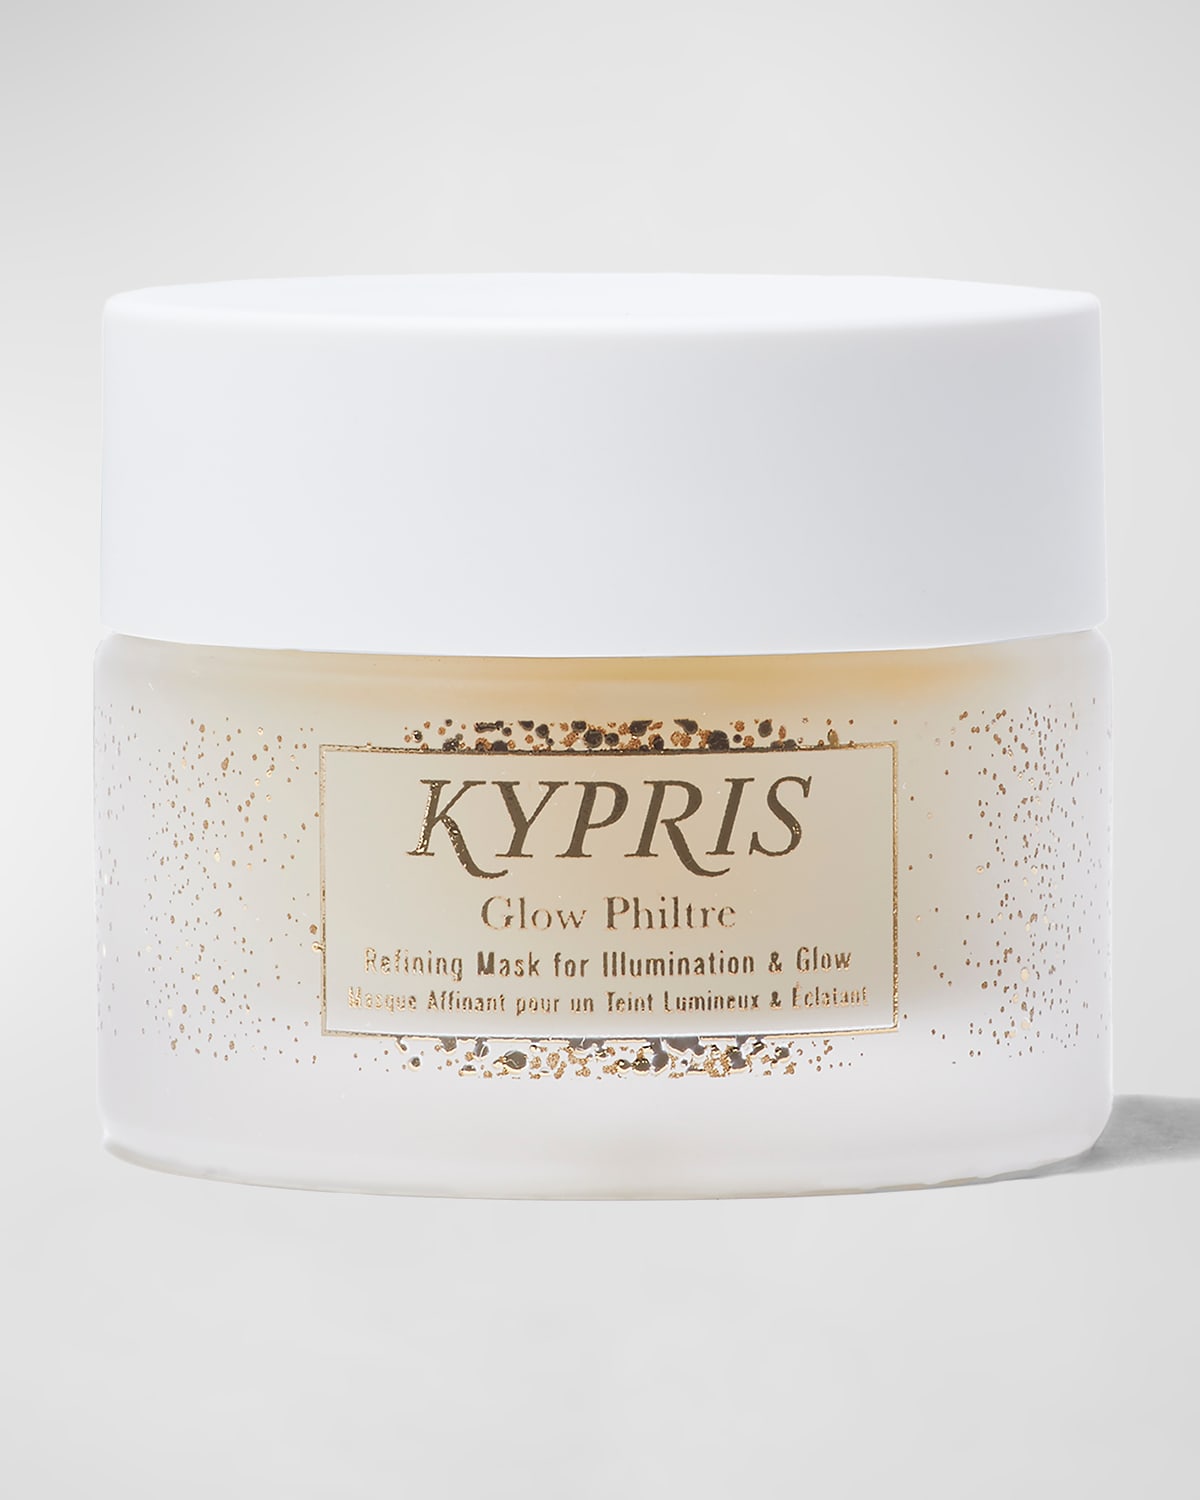 KYPRIS Glow Philtre Treatment Mask, 1.6 oz.